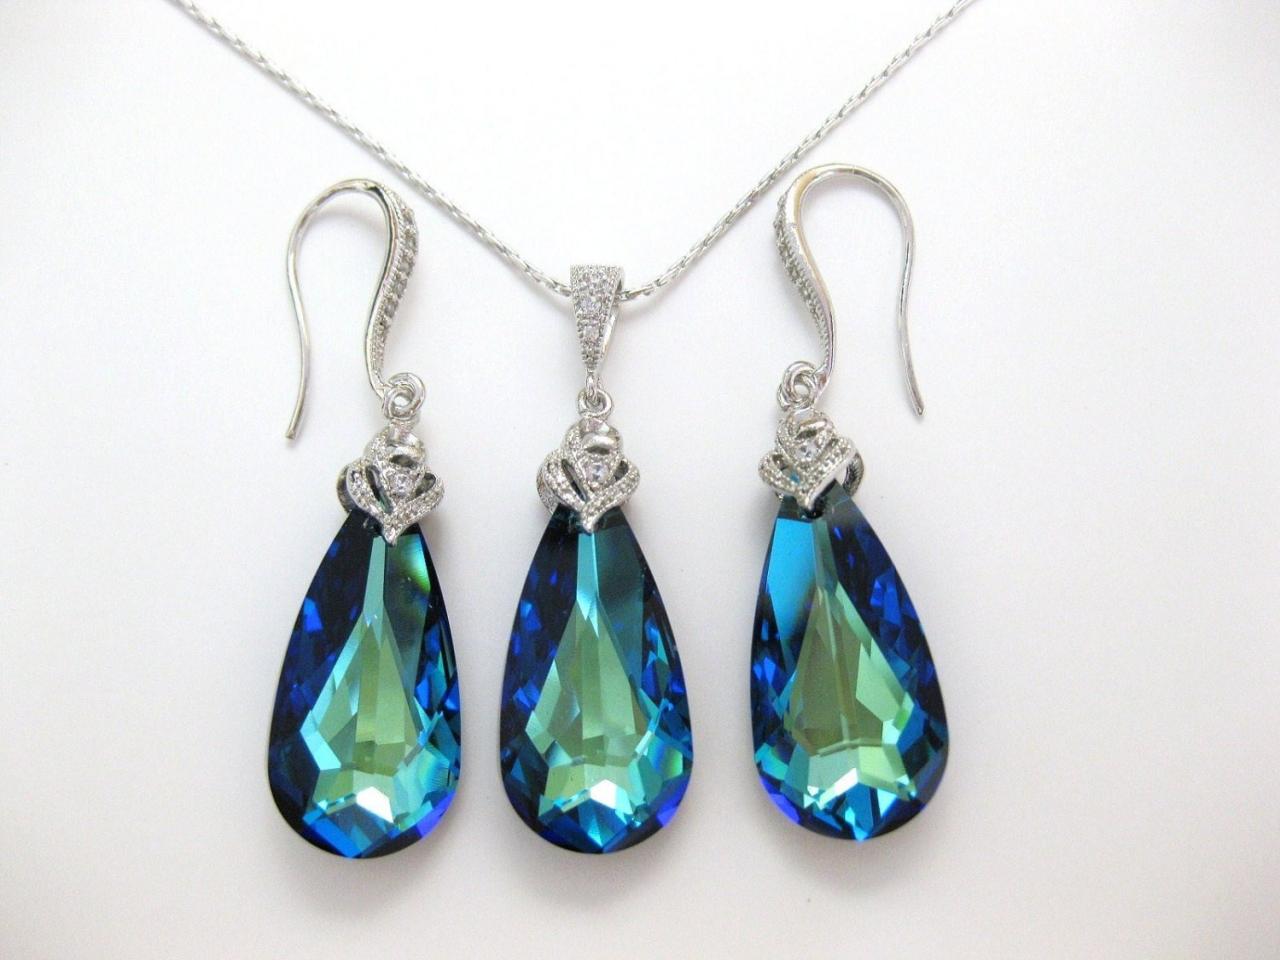 Bermuda Blue Earrings & Necklace Gift Set Swarovski Crystal Teardrop Bridesmaid Gift Bridal Earrings Wedding Jewelry Blue Jewelry (NE001)